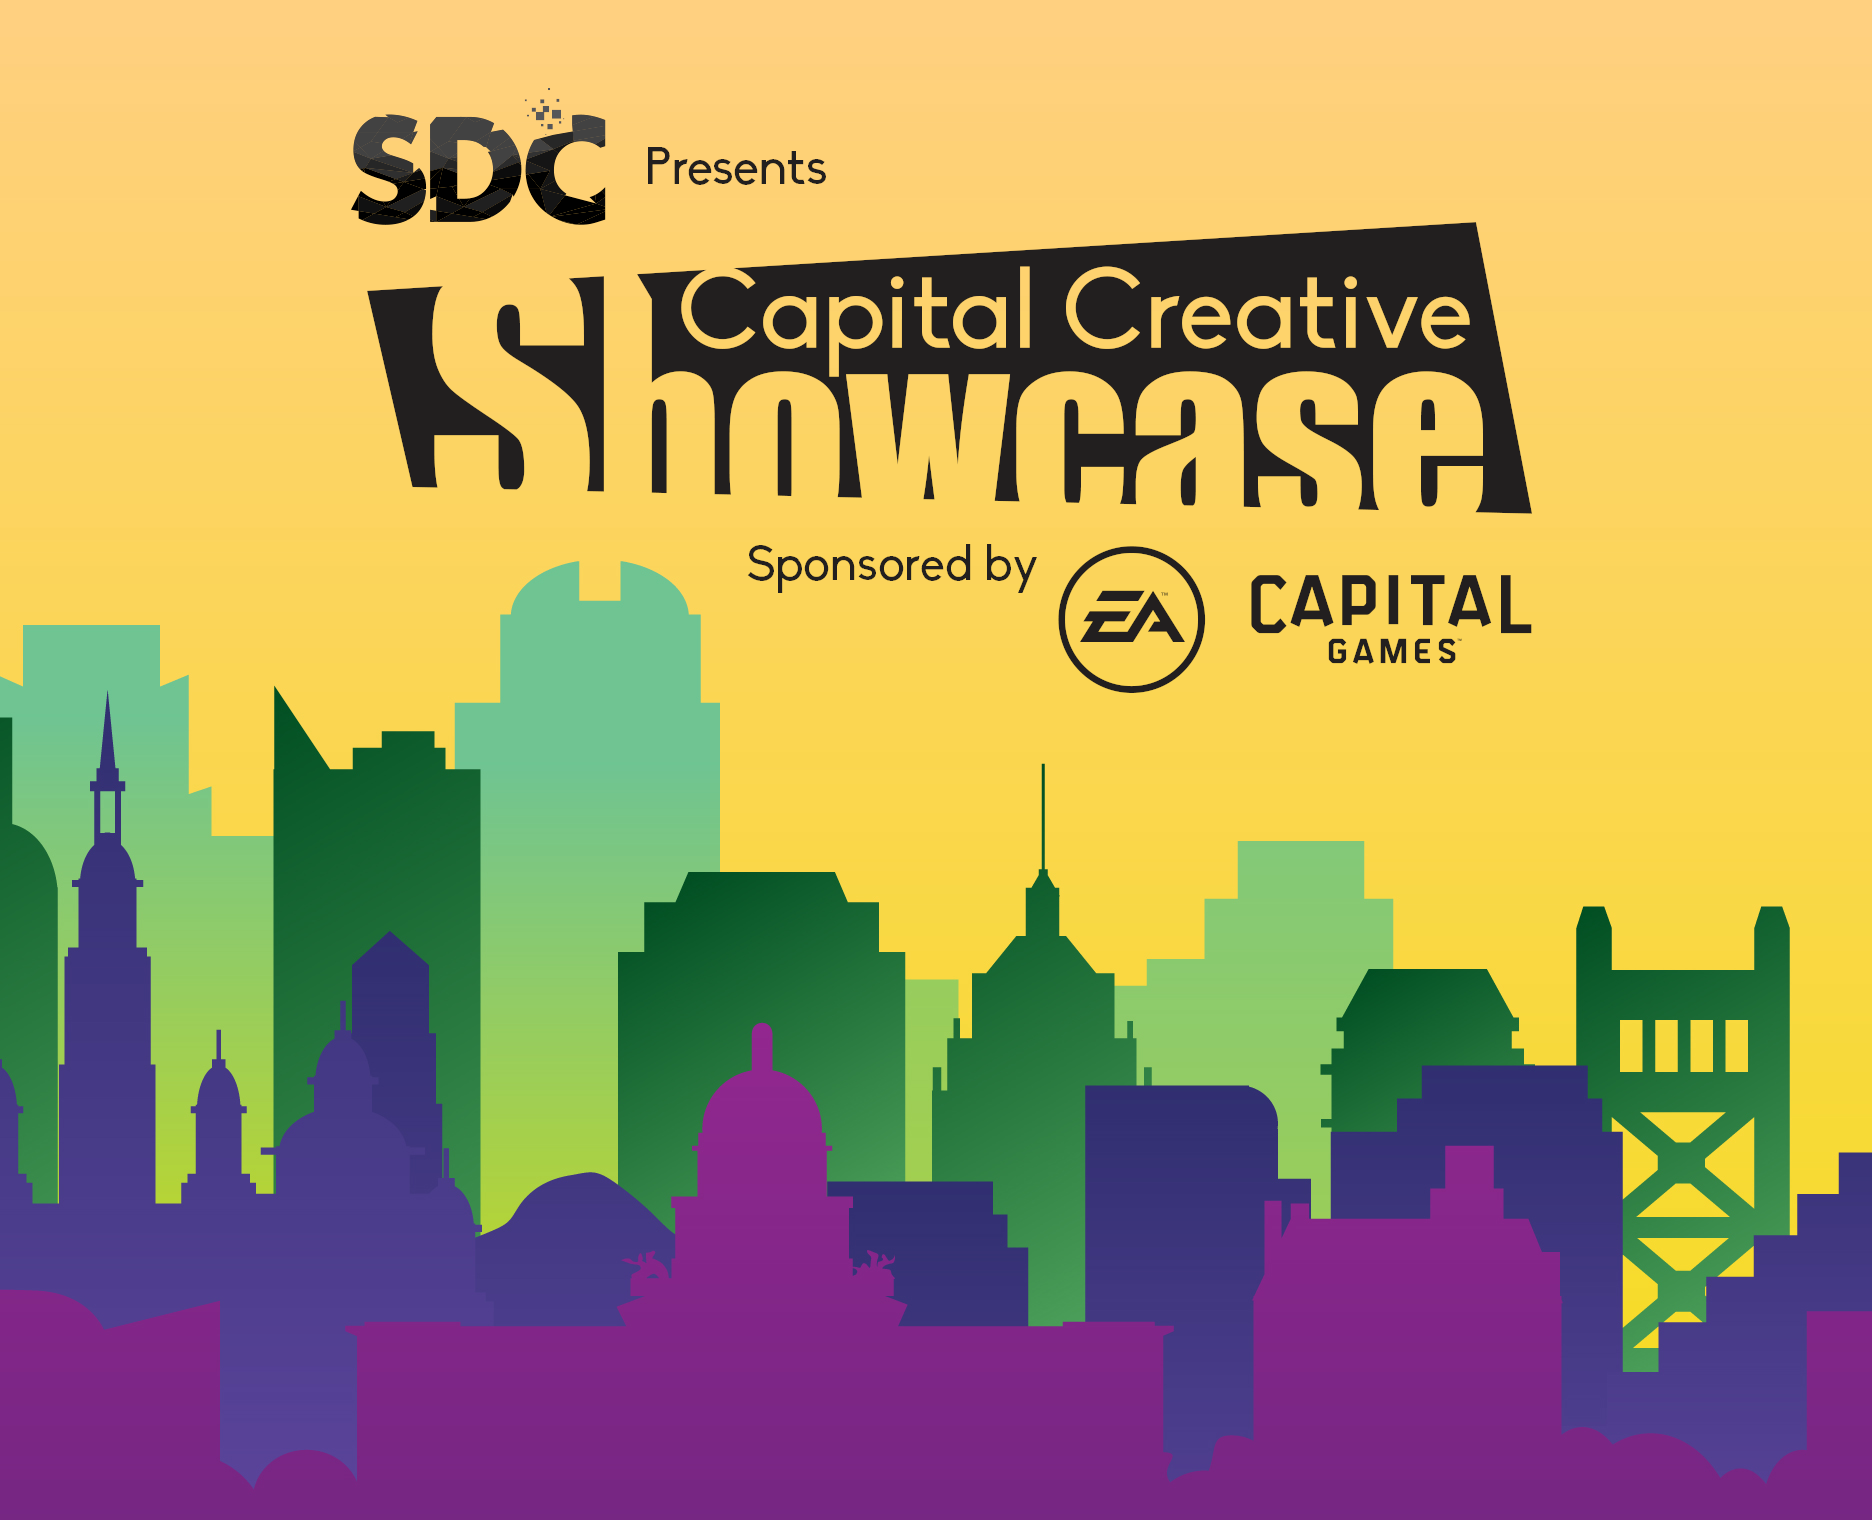 SDC presents Capital Creative Showcase sponsored by EA Capital Games